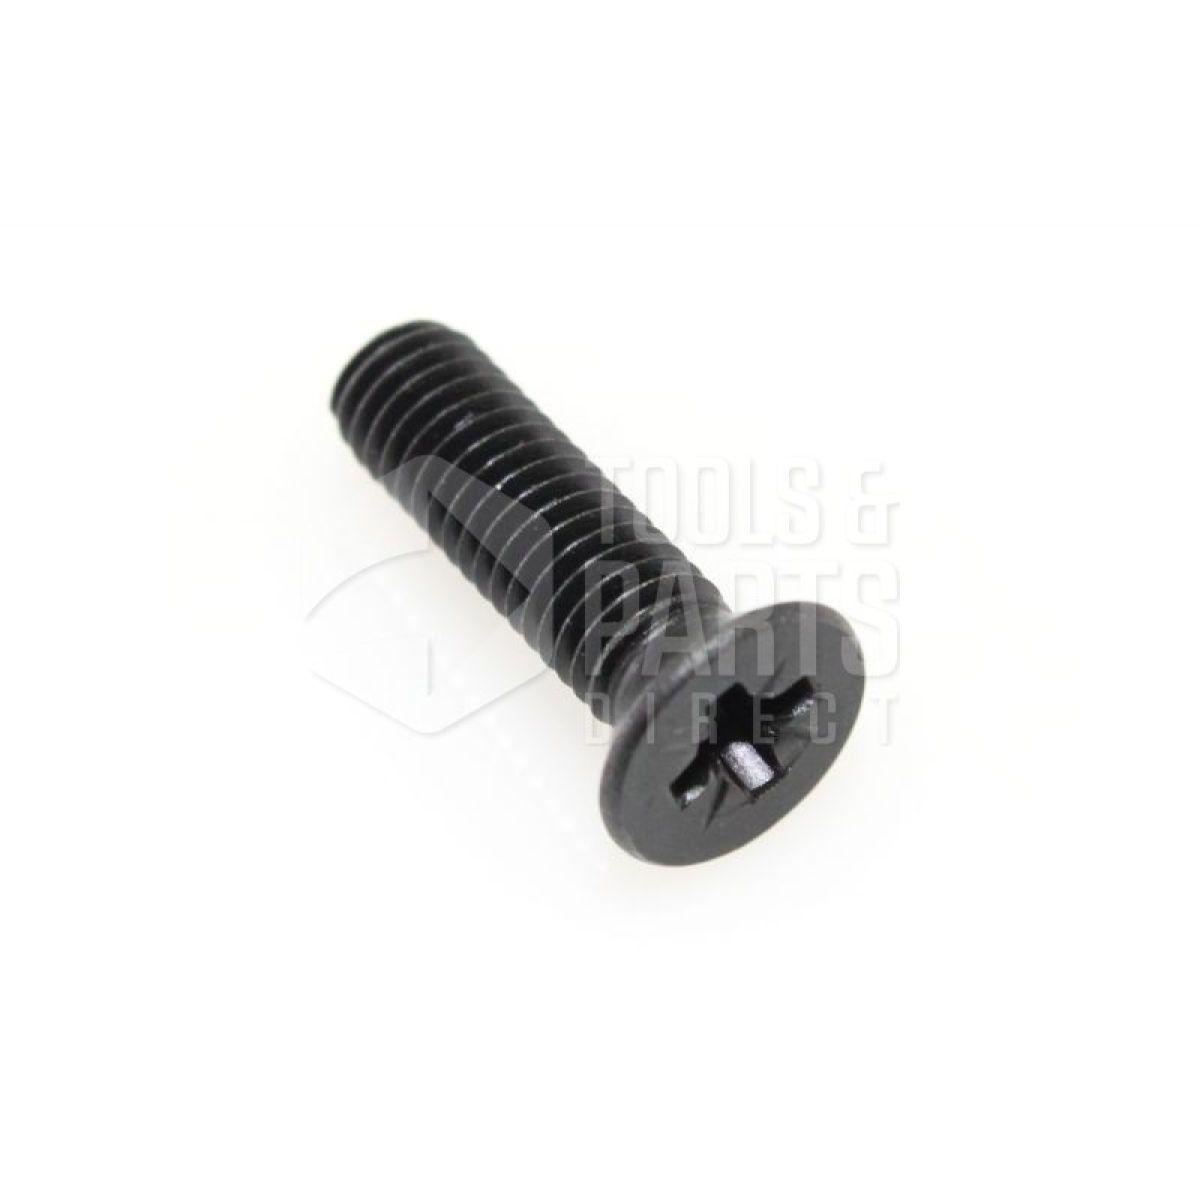 Black & Decker KD355RE Type 1 Drill Spare Parts - Part Shop Direct